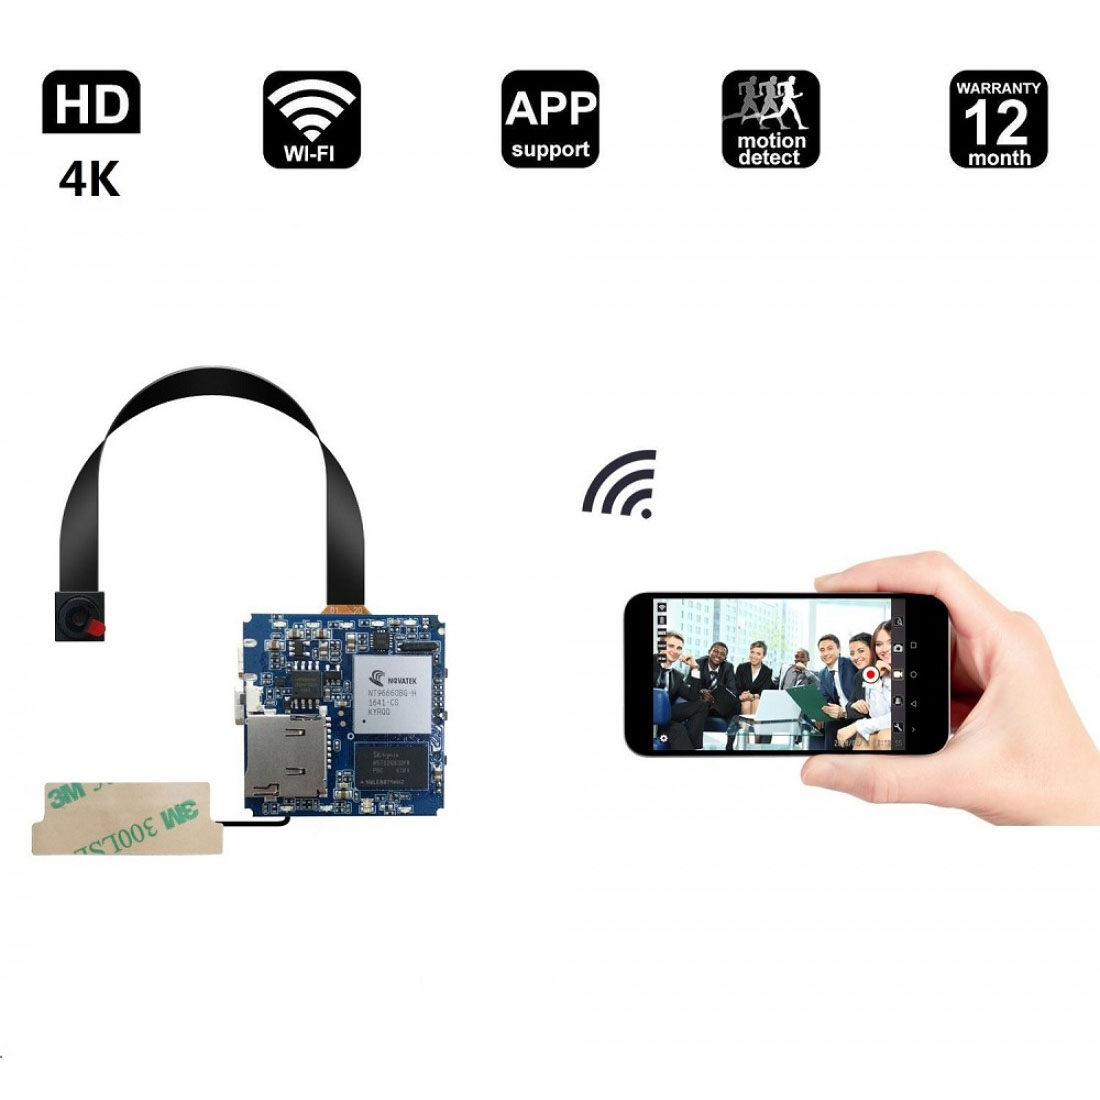 4K 미니 카메라, Full 1080p HD 몰래카메라, WIFI 무선 [움직임 감지, DIY 카메라, 앱 제어] 내니캠 | 가정, 어린이, 아기, 애완동물 모니터링 캠